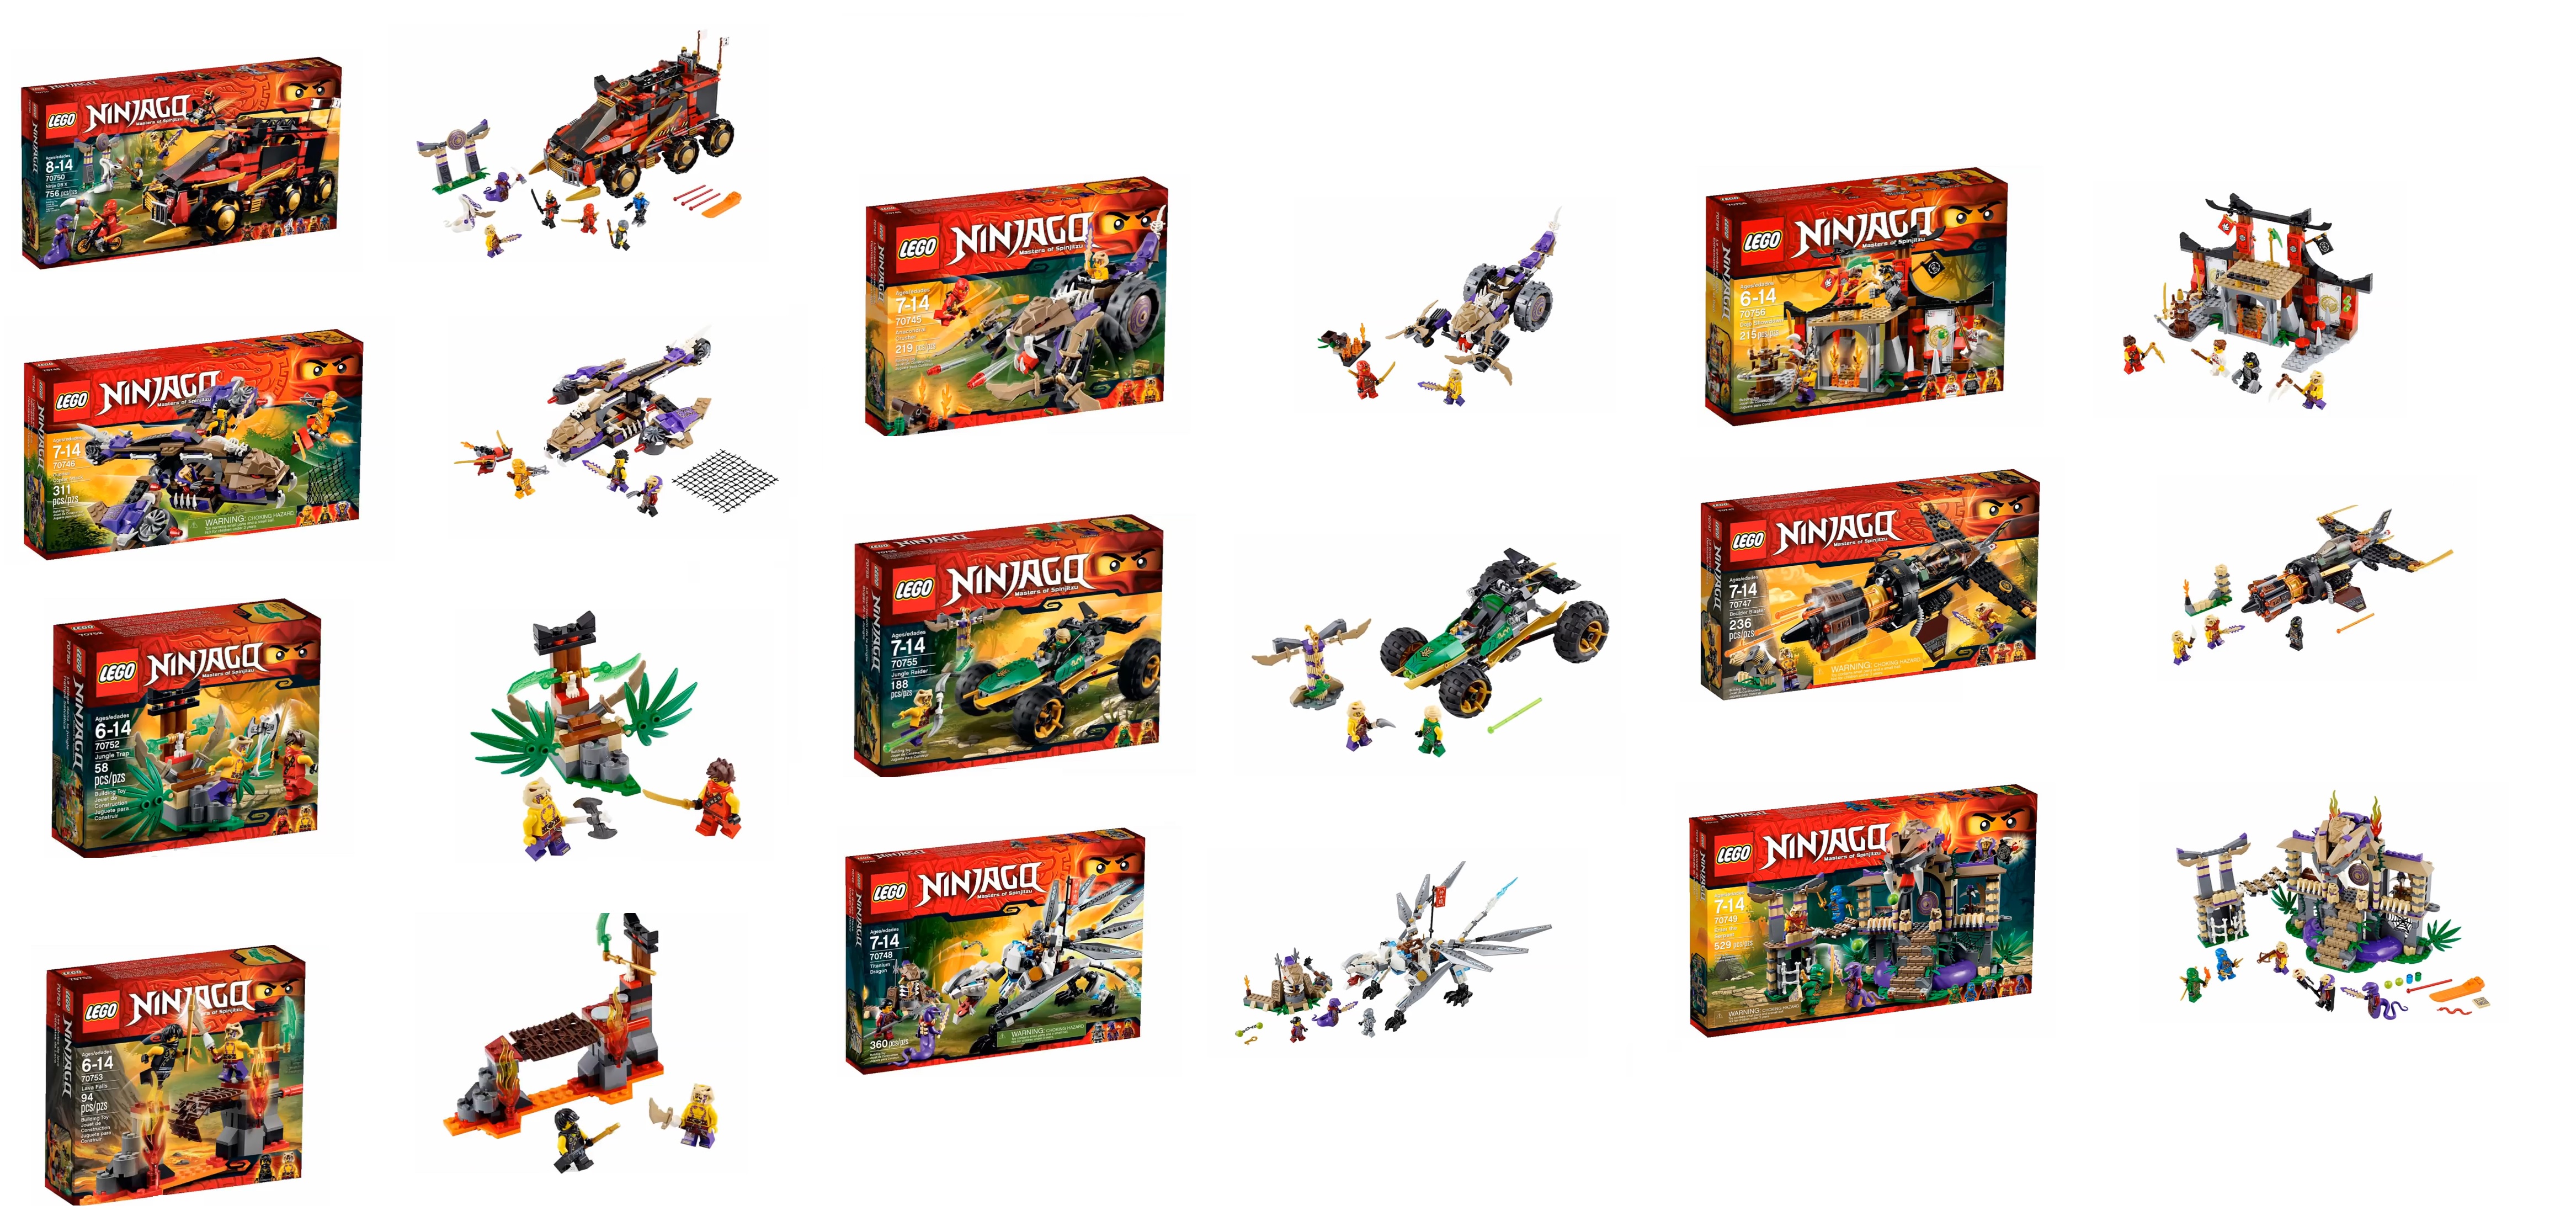 svulst ciffer dvs. 2015 LEGO Ninjago Set Pictures: 70745 70746 70747 70748 70749 70750 70752  70753 70755 70756 - Toys N Bricks